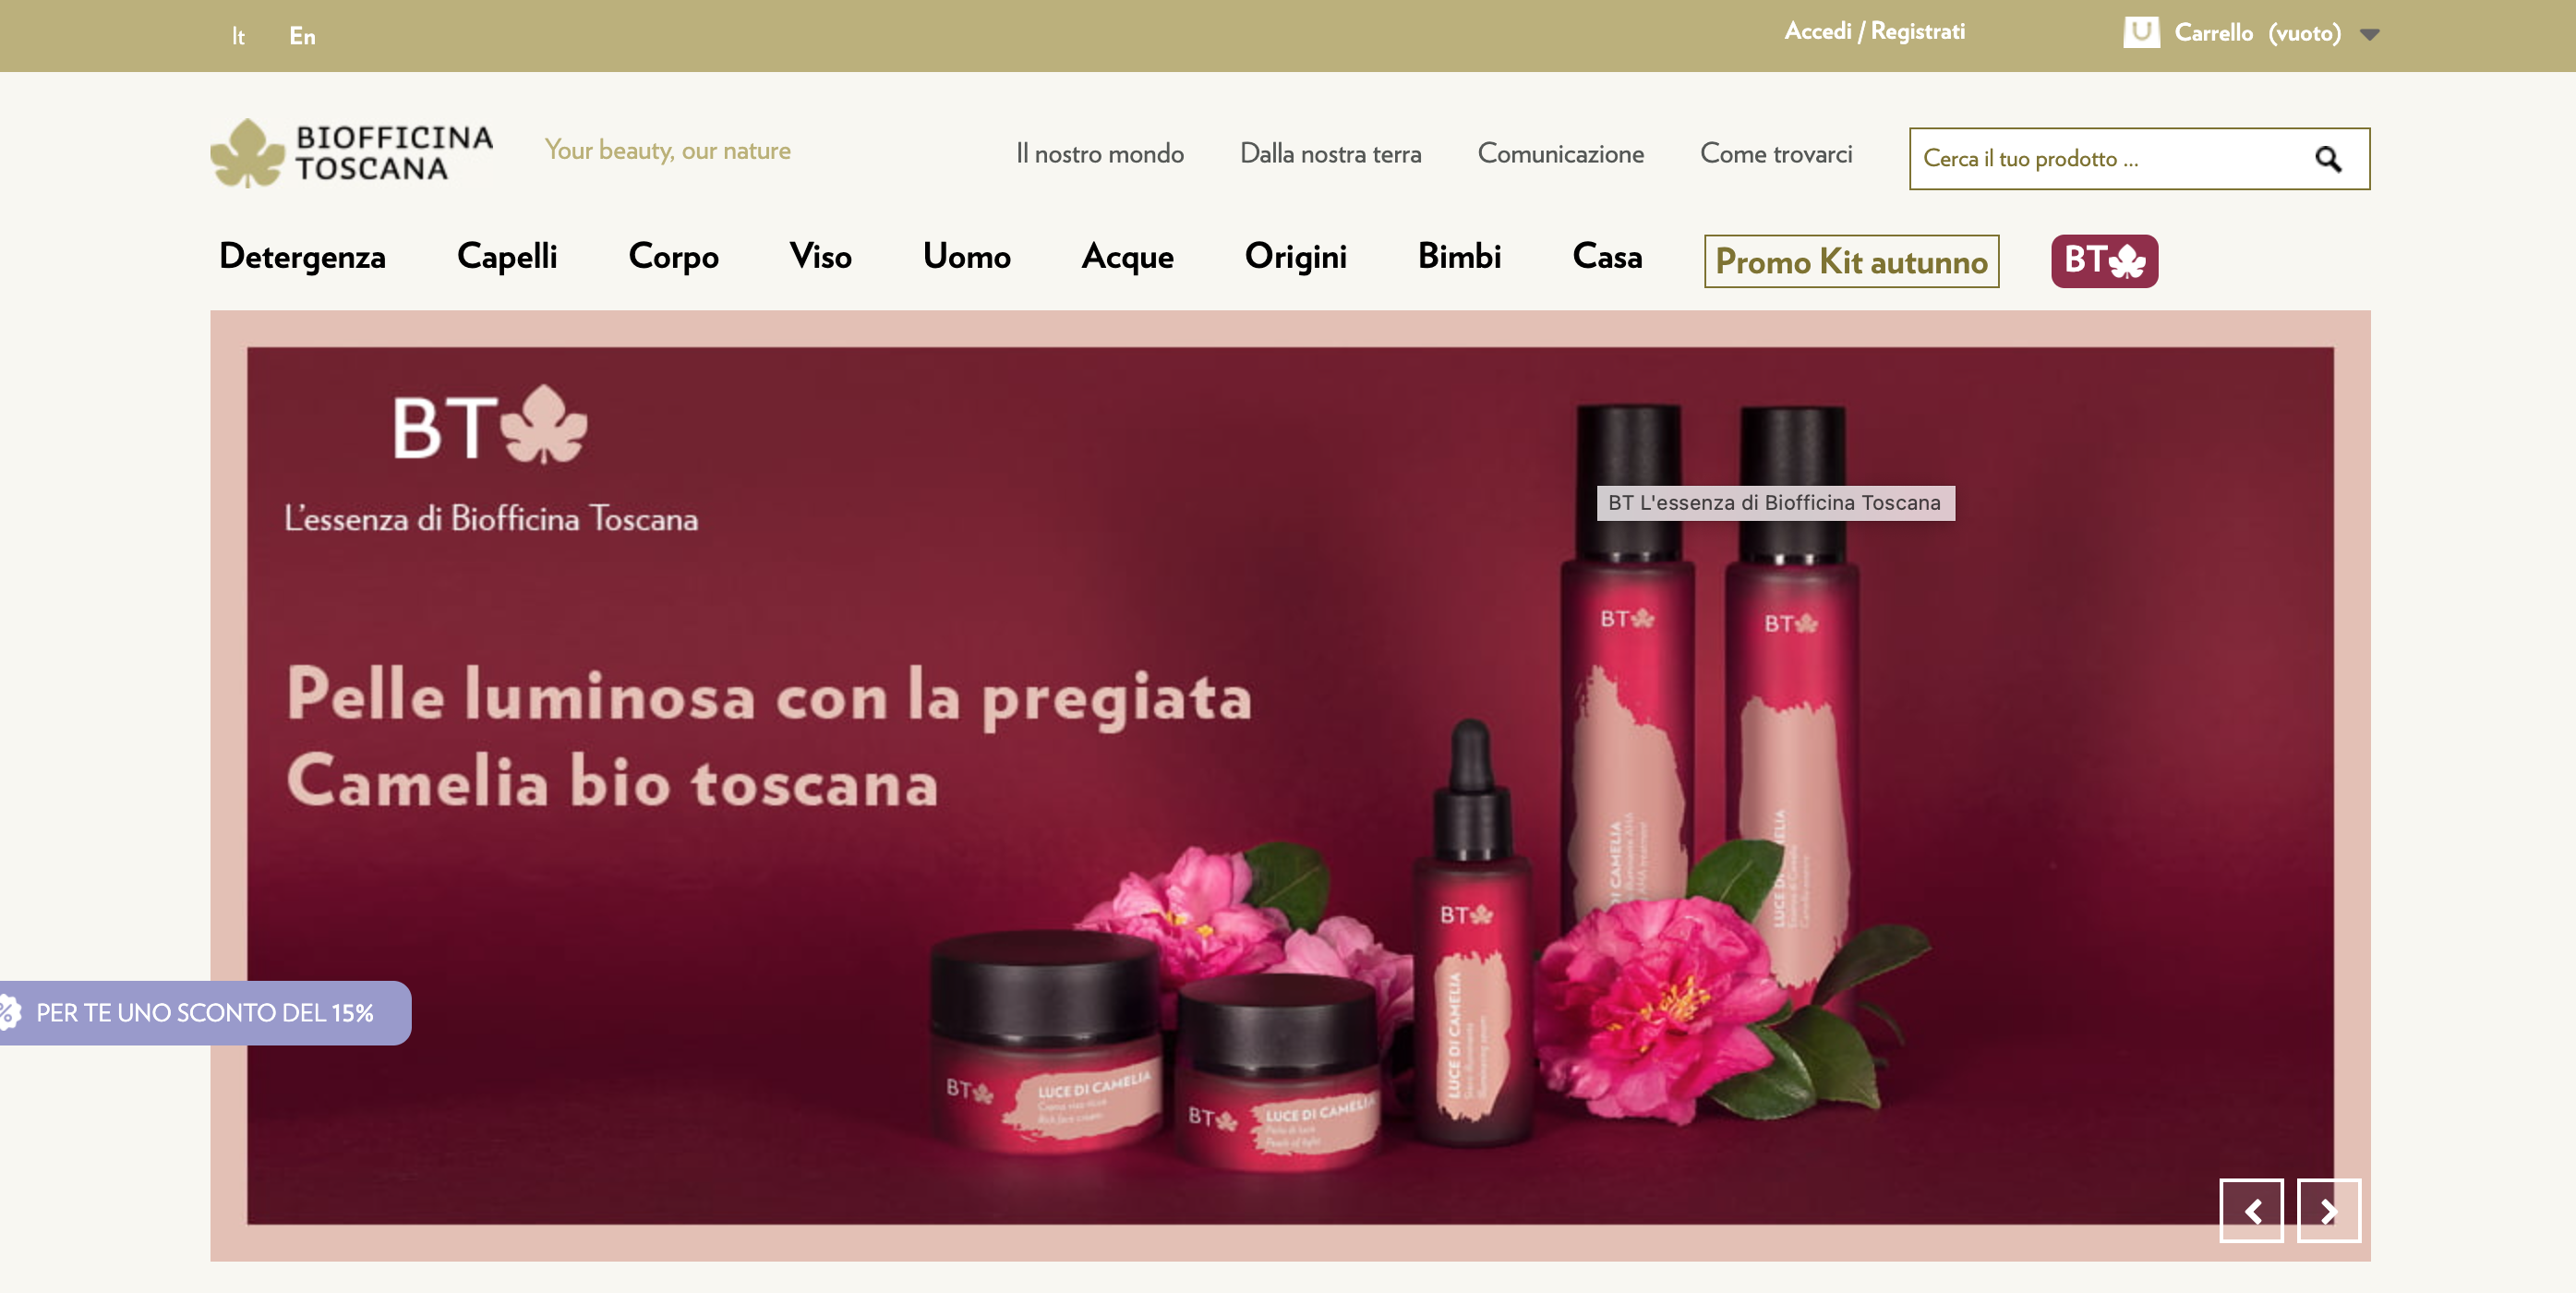 Biofficina Toscana cosmetici biologici